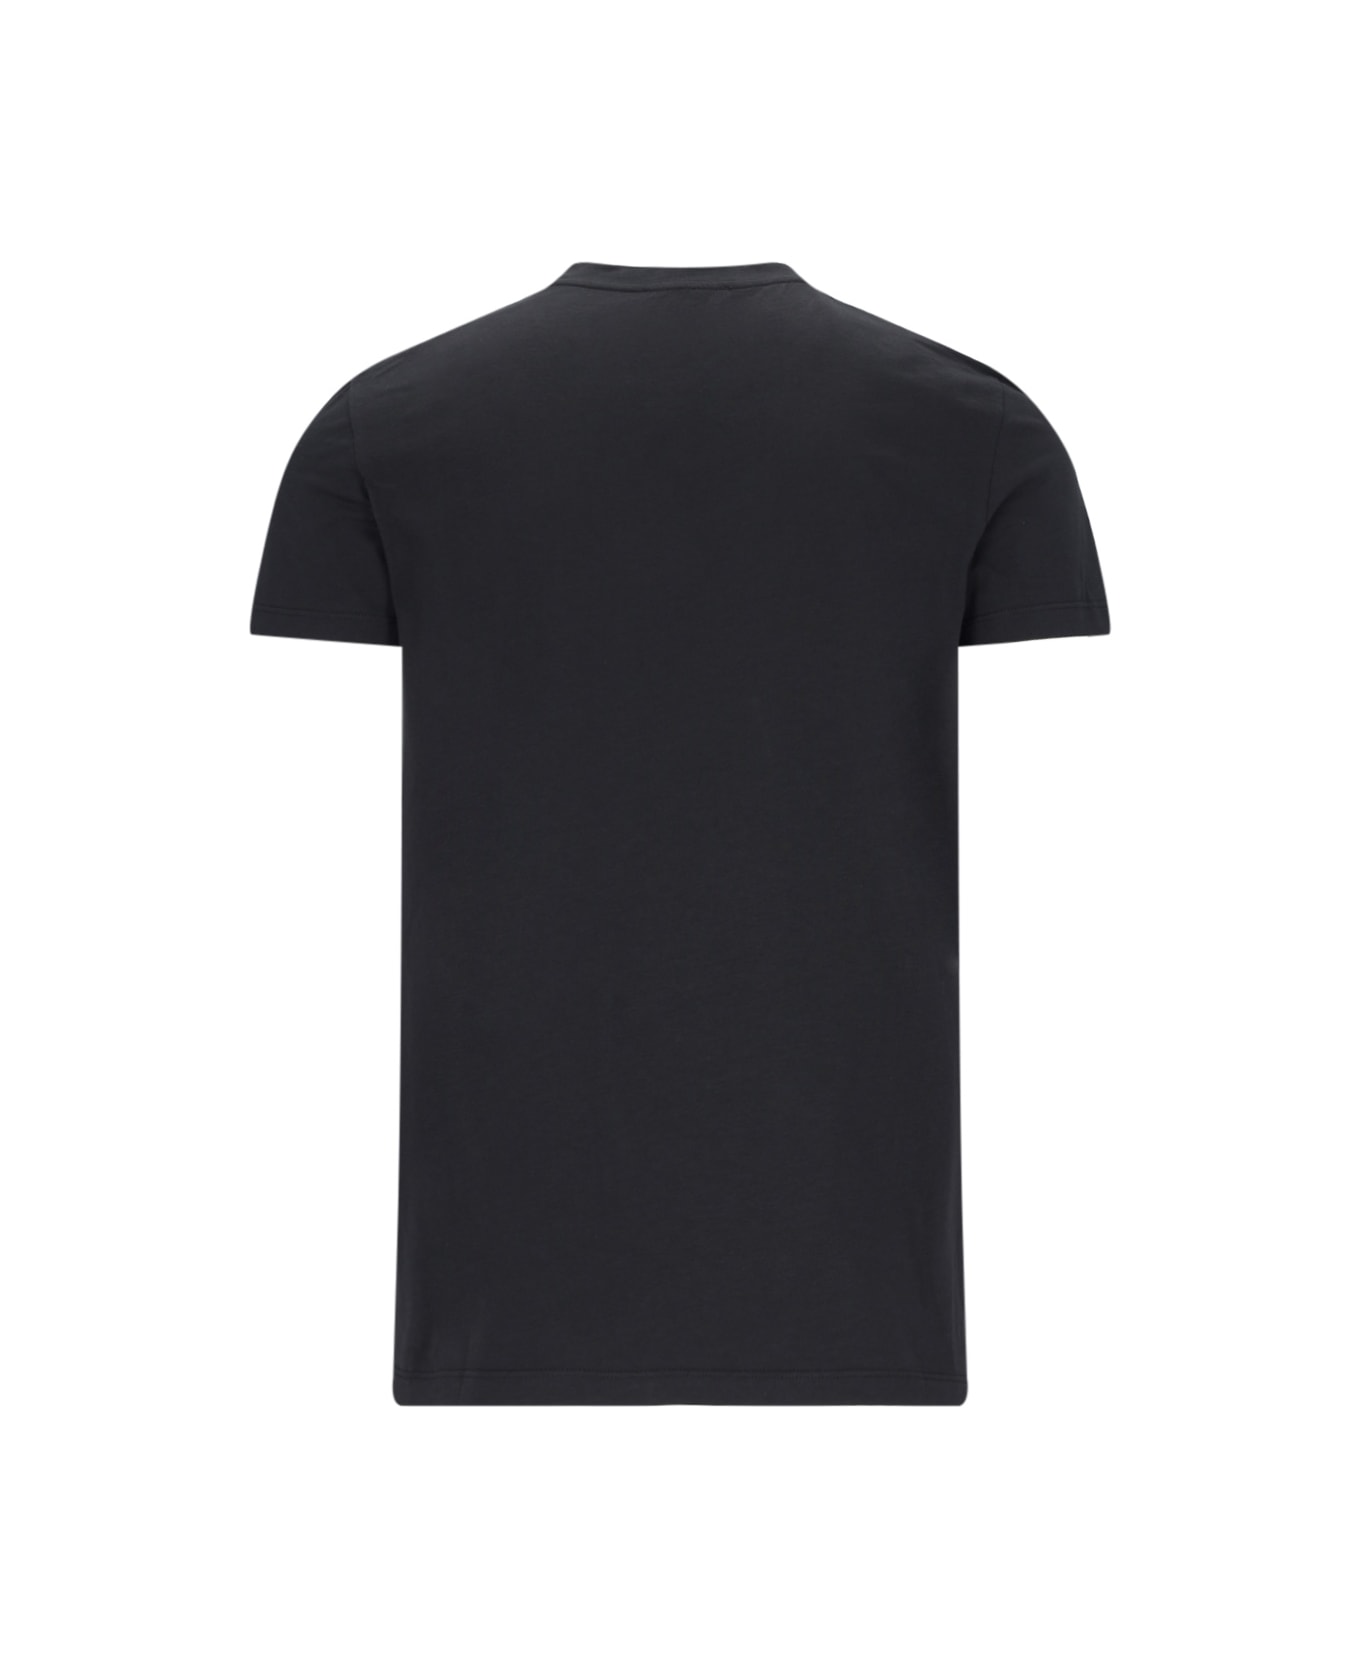 Balmain Flocked T-shirt - Black   シャツ